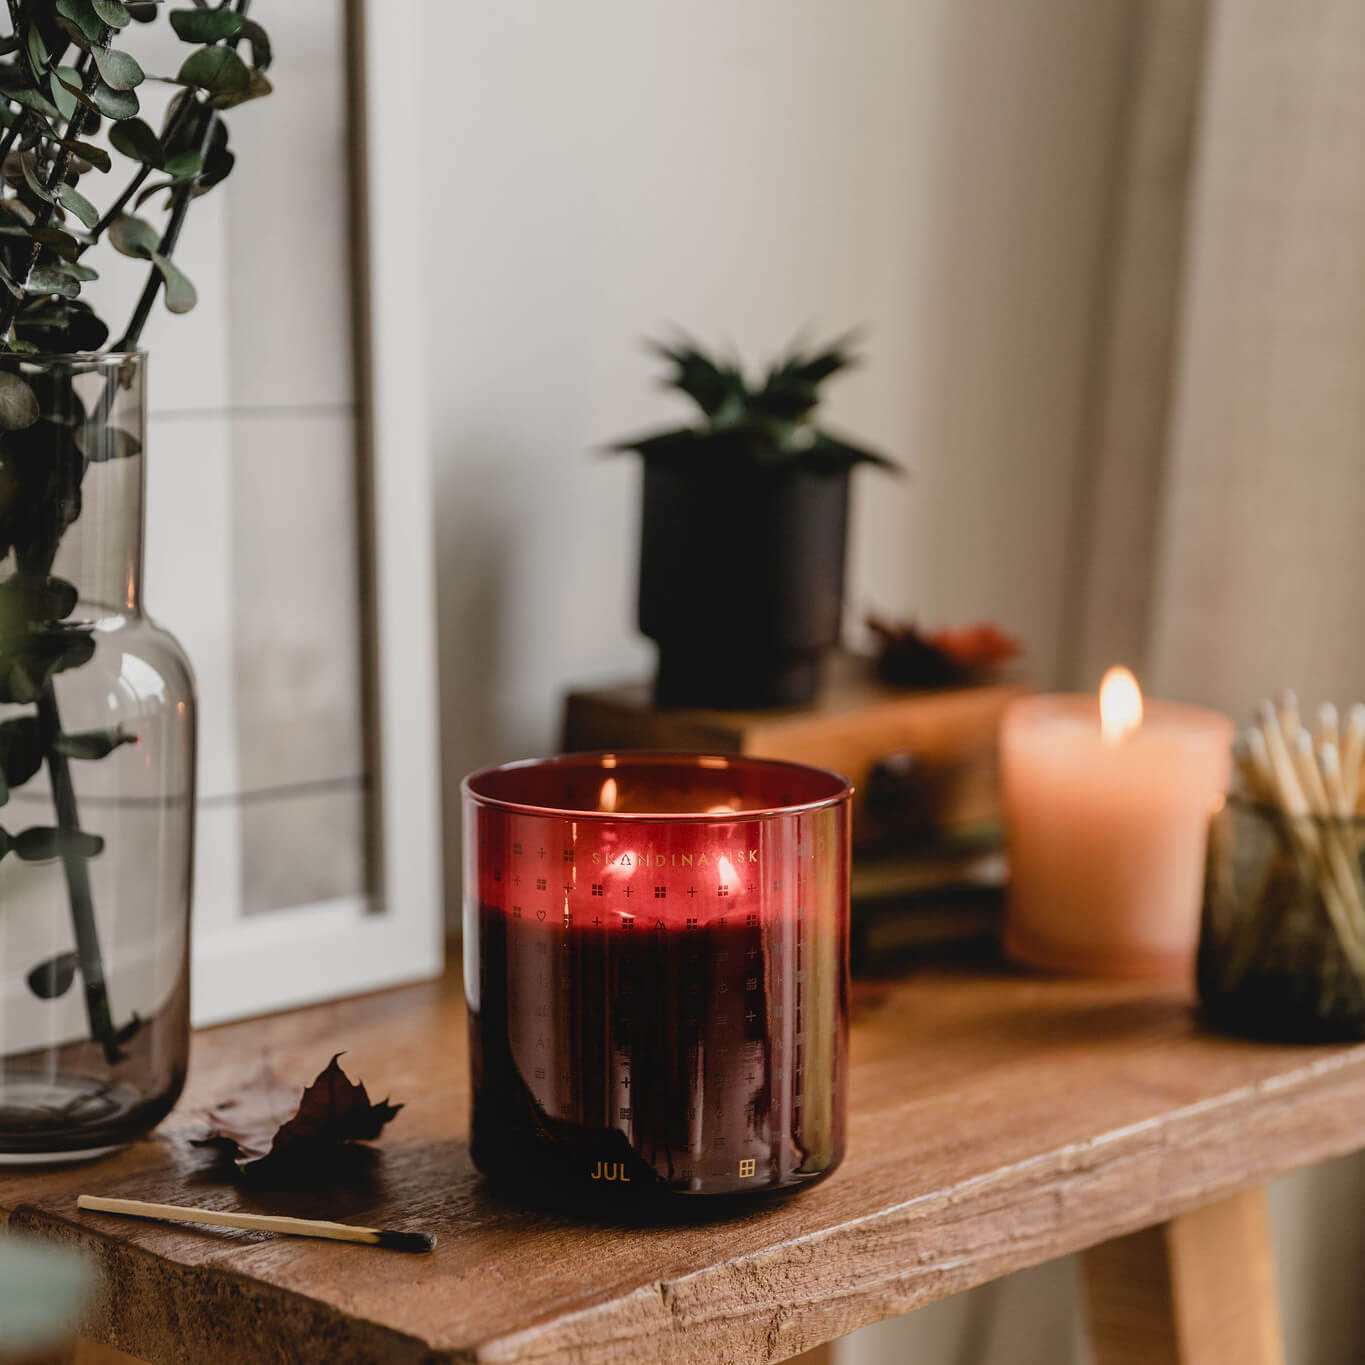 Skandinavisk JUL (Christmas) Scented Candle - Osmology Scented Candles & Home Fragrance